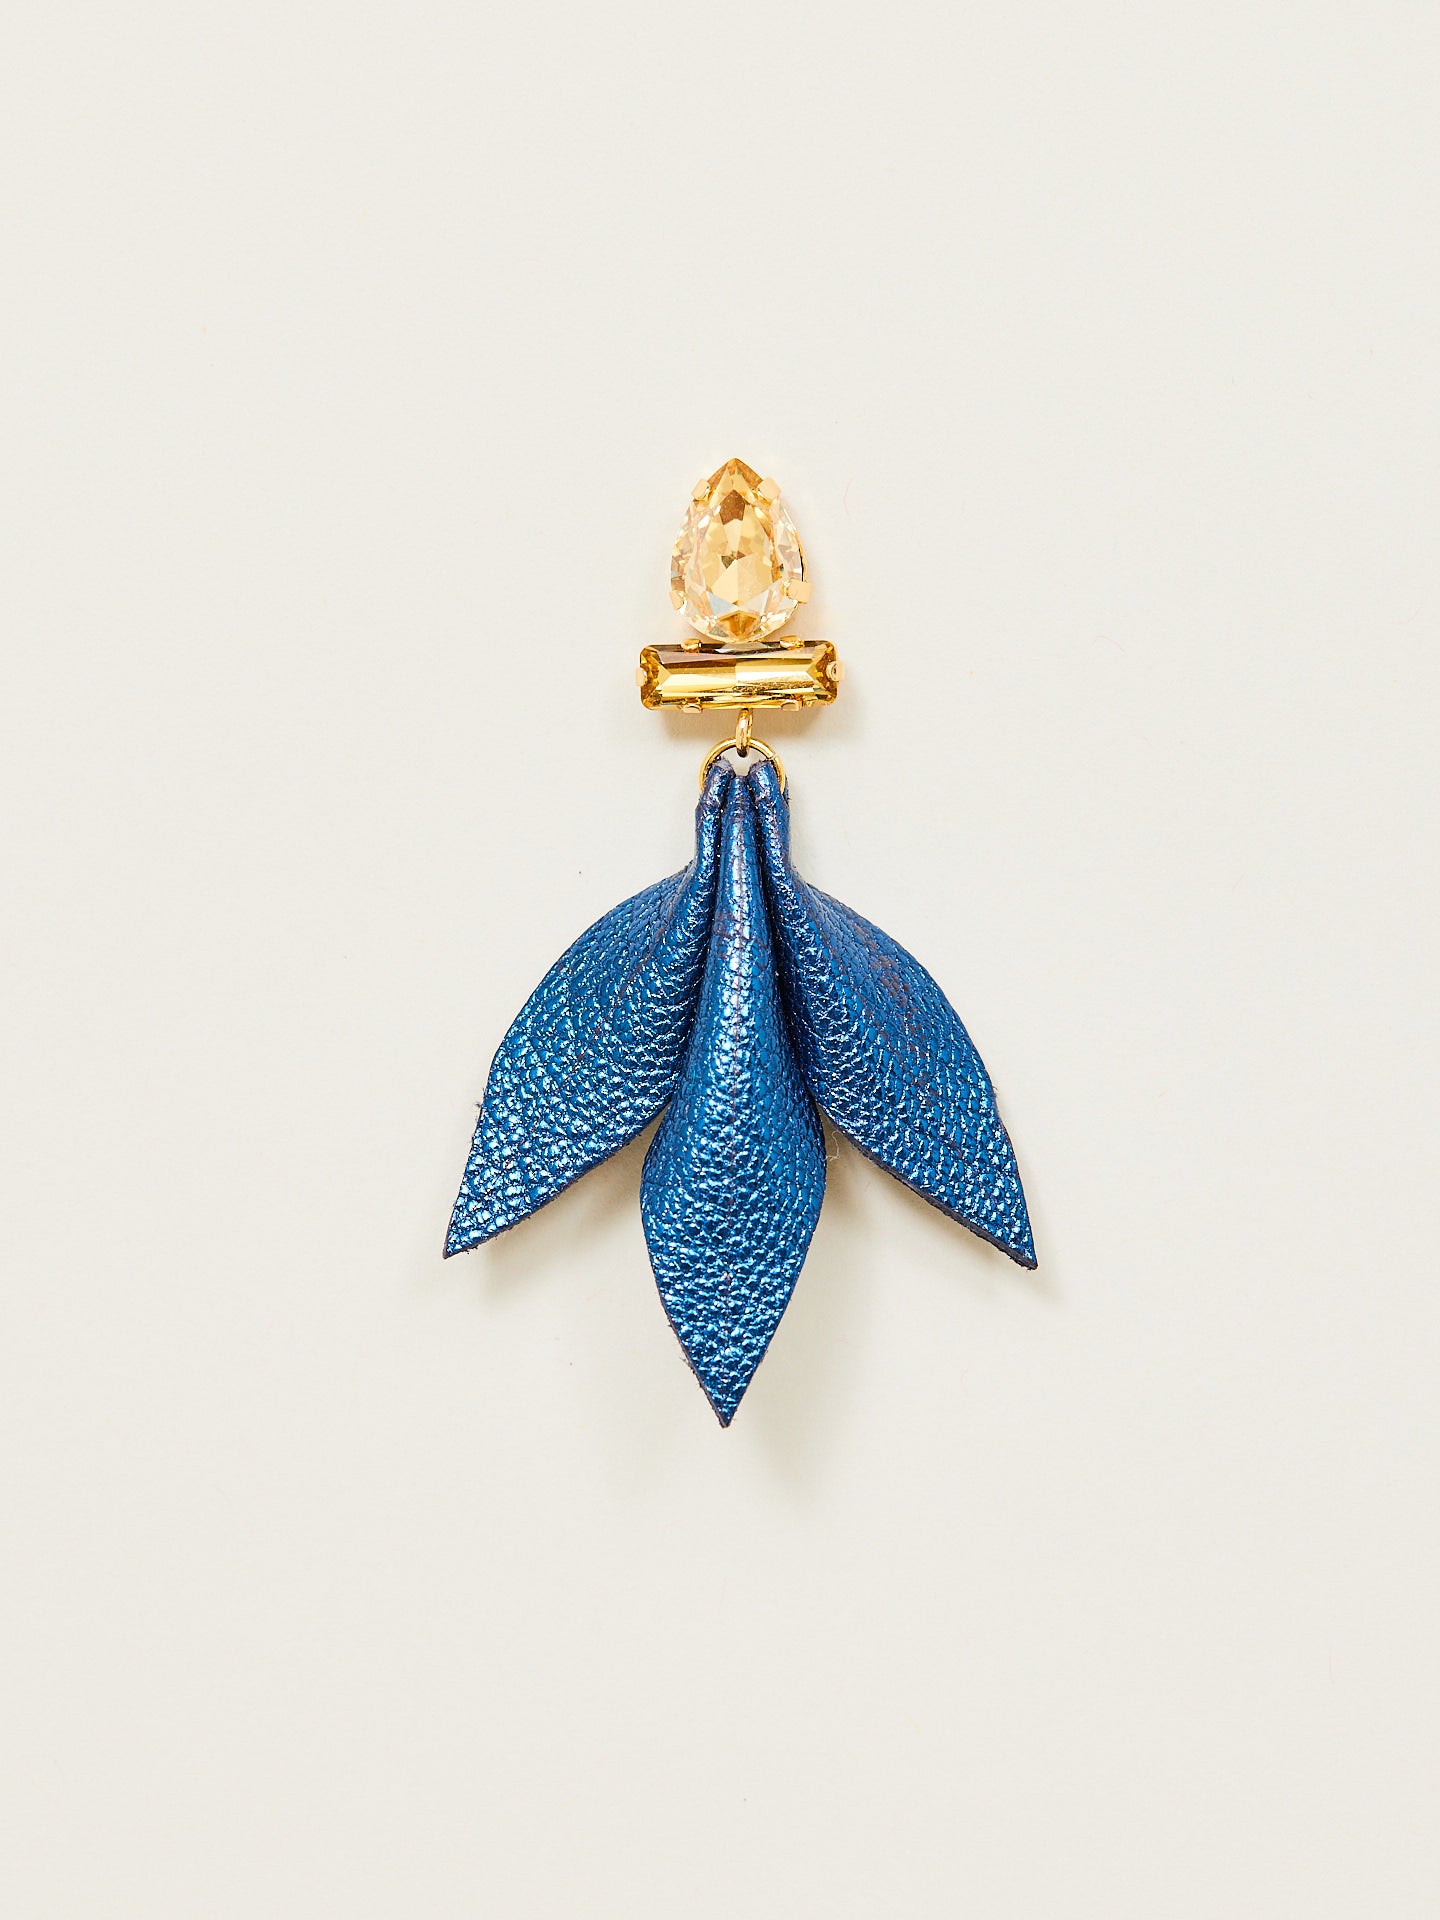 blauer Nappa Leder Ohrring mit goldenem Stecker